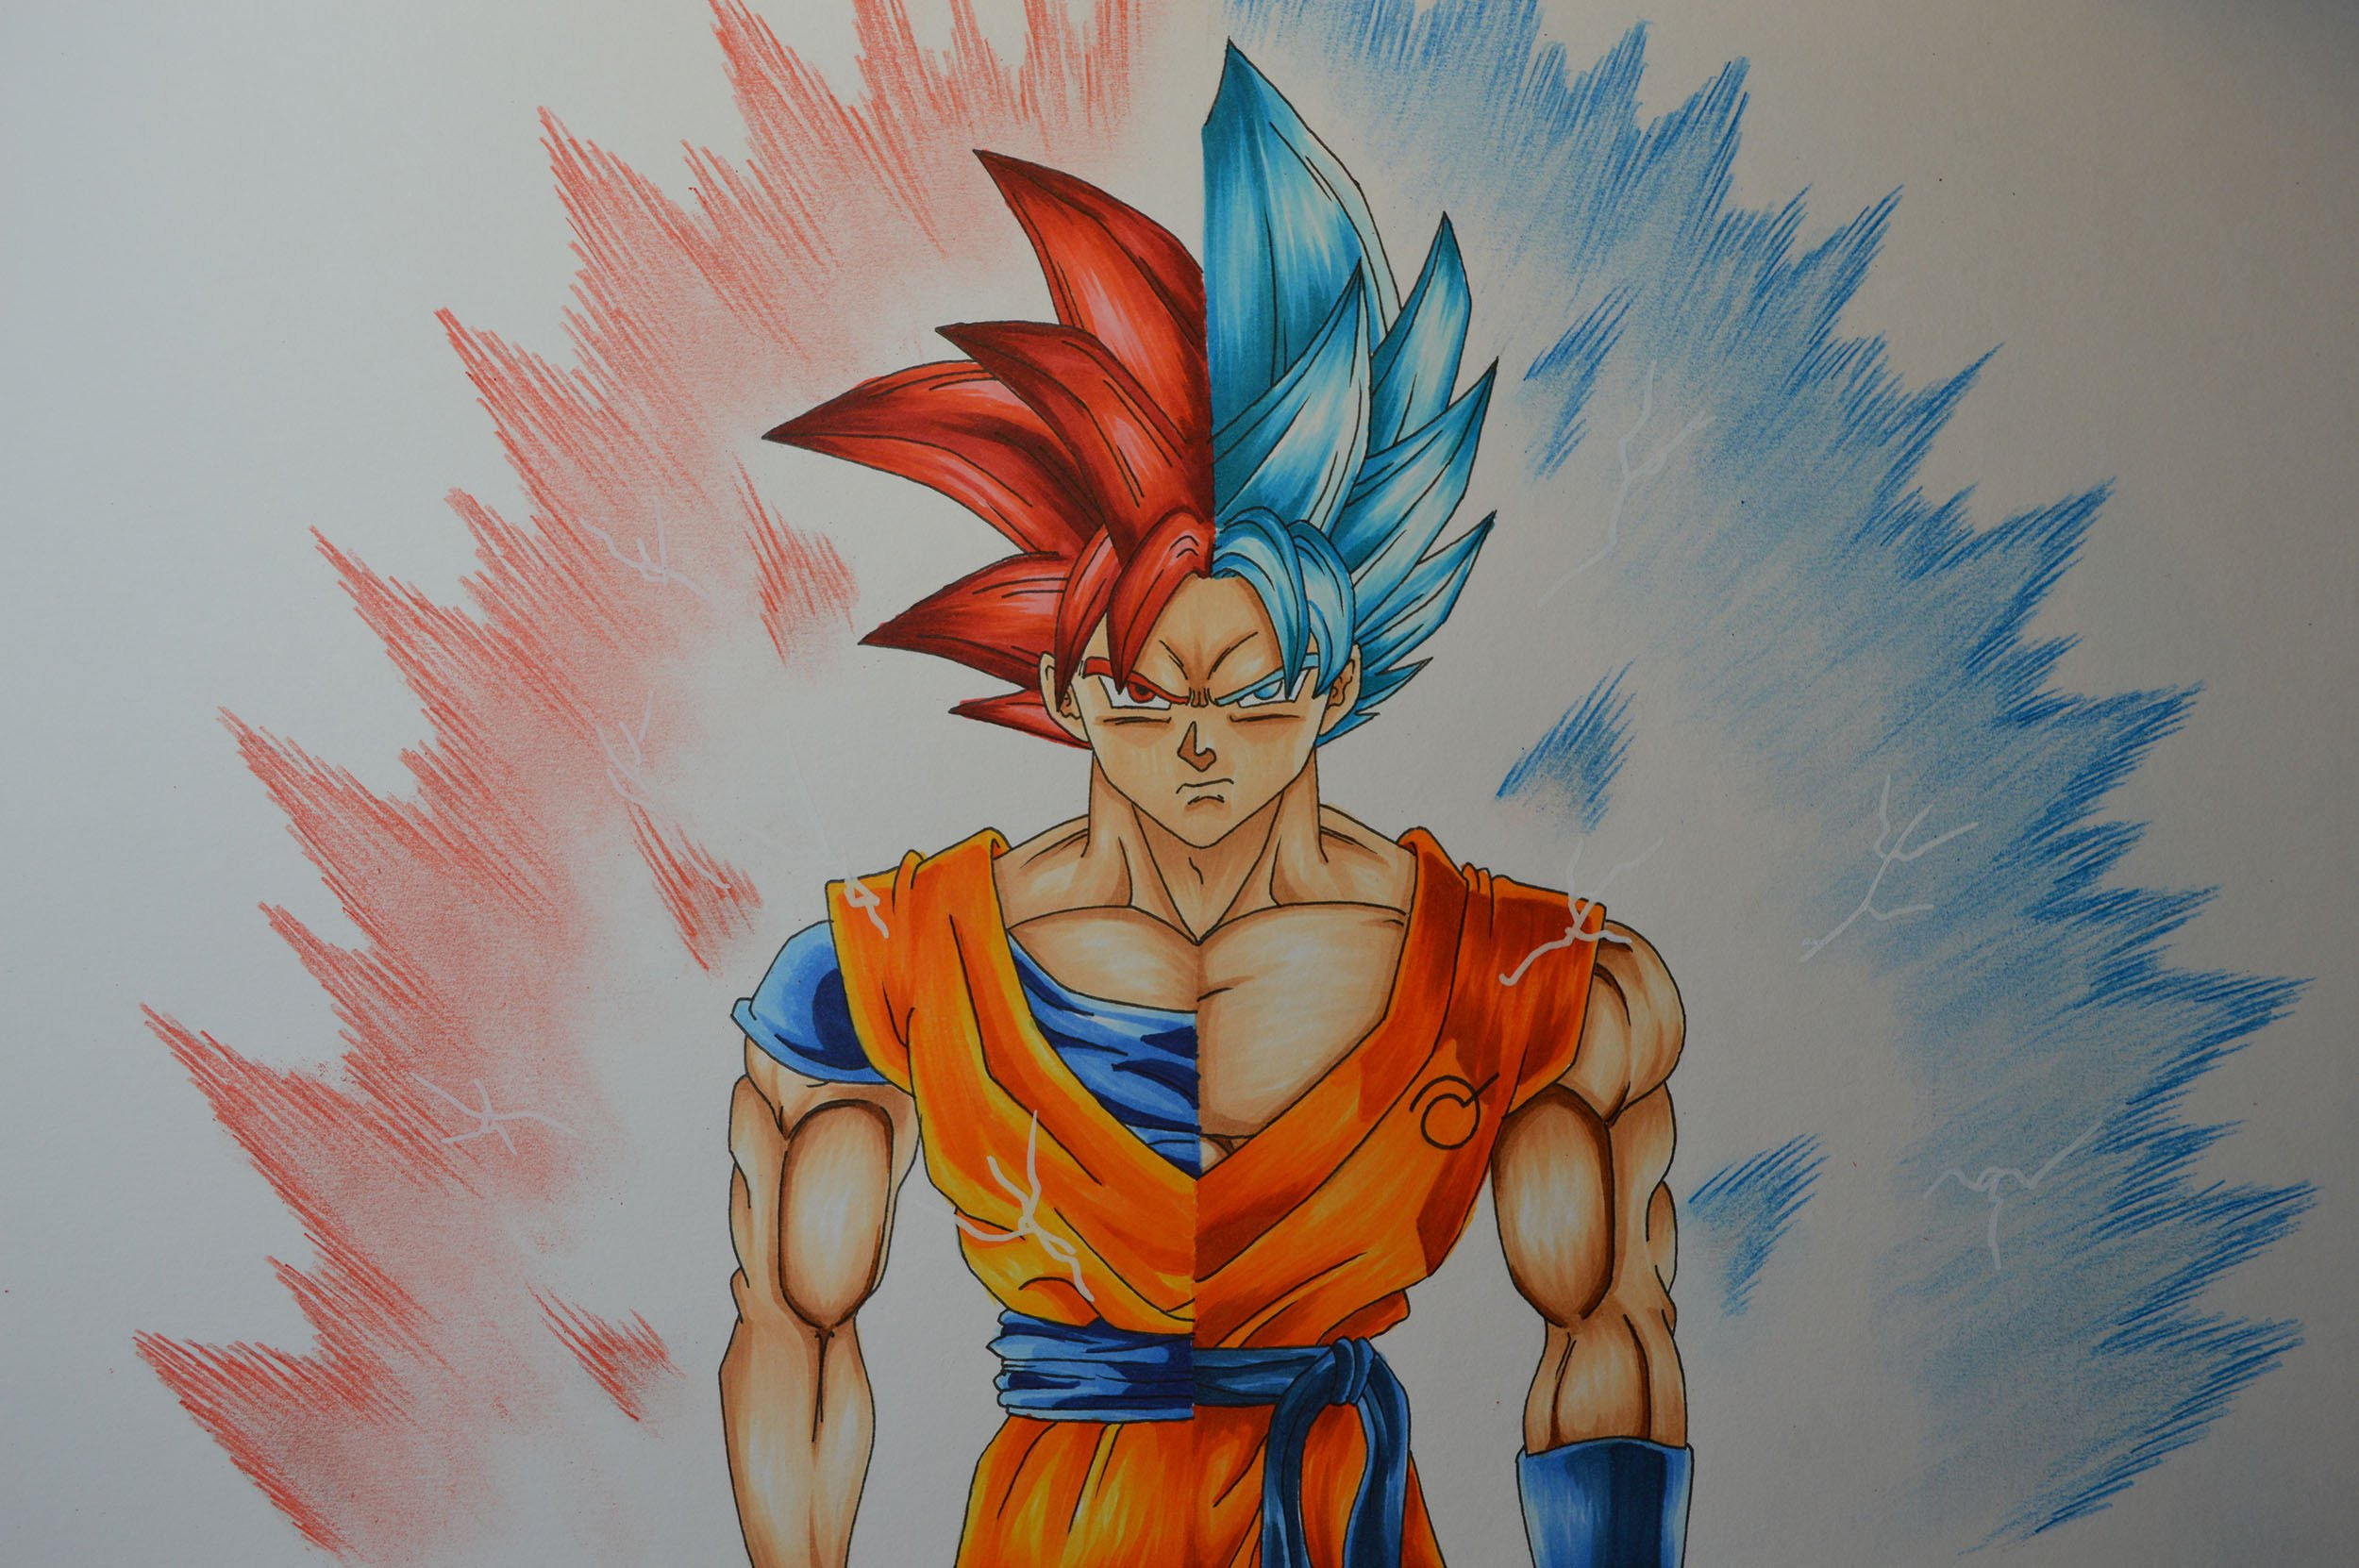 Goku Super Saiyan 2 Drawing at PaintingValley.com | Explore collection